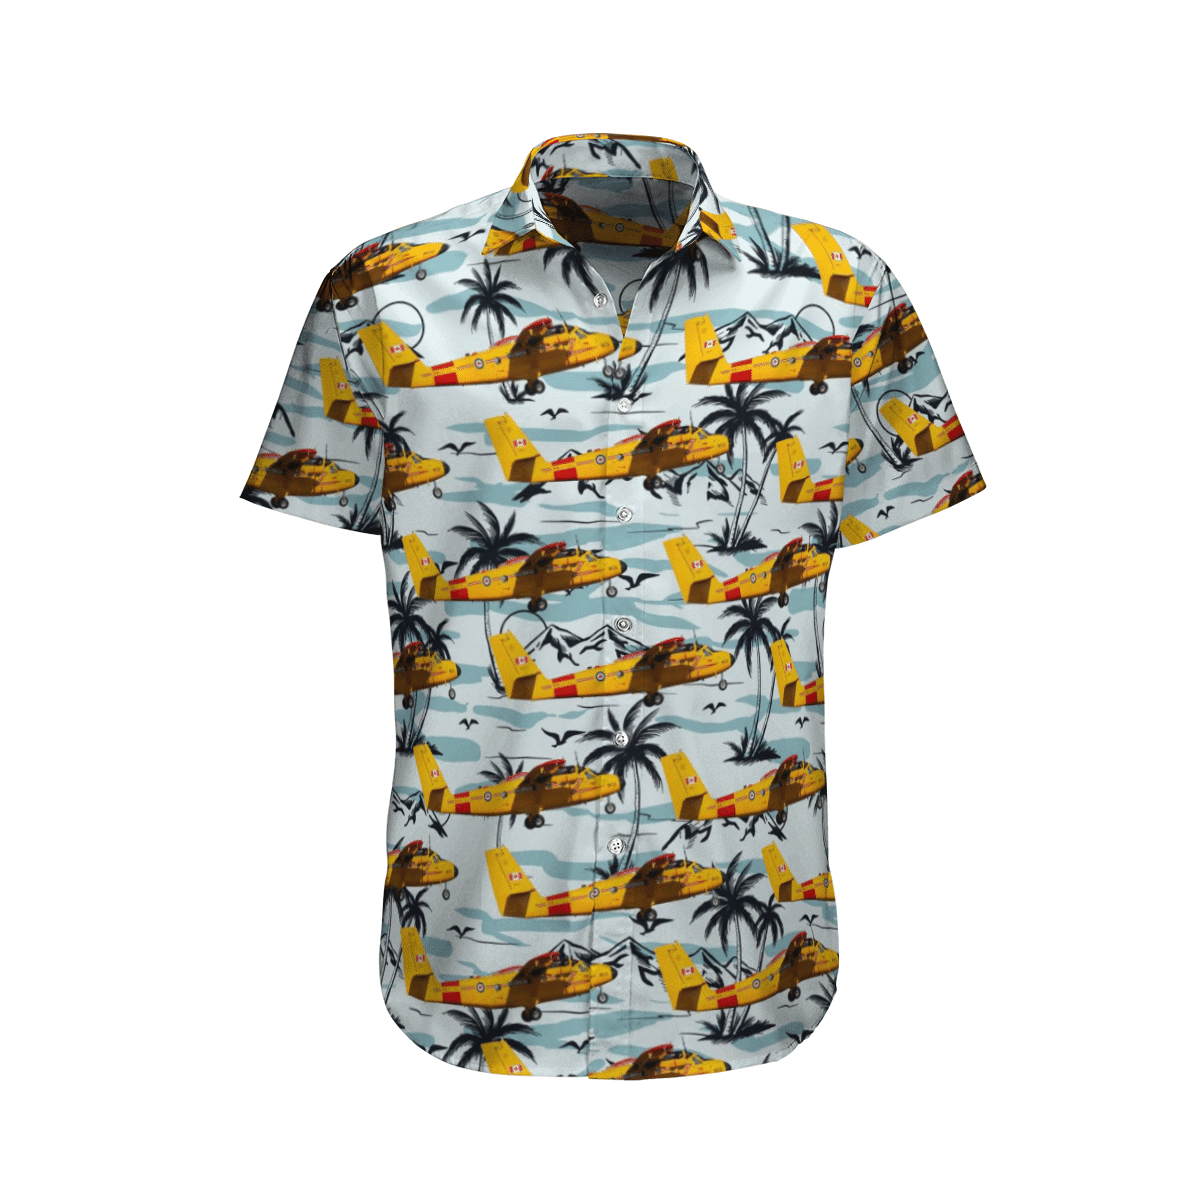 Get a new Hawaiian shirt to enjoy summer vacation 179